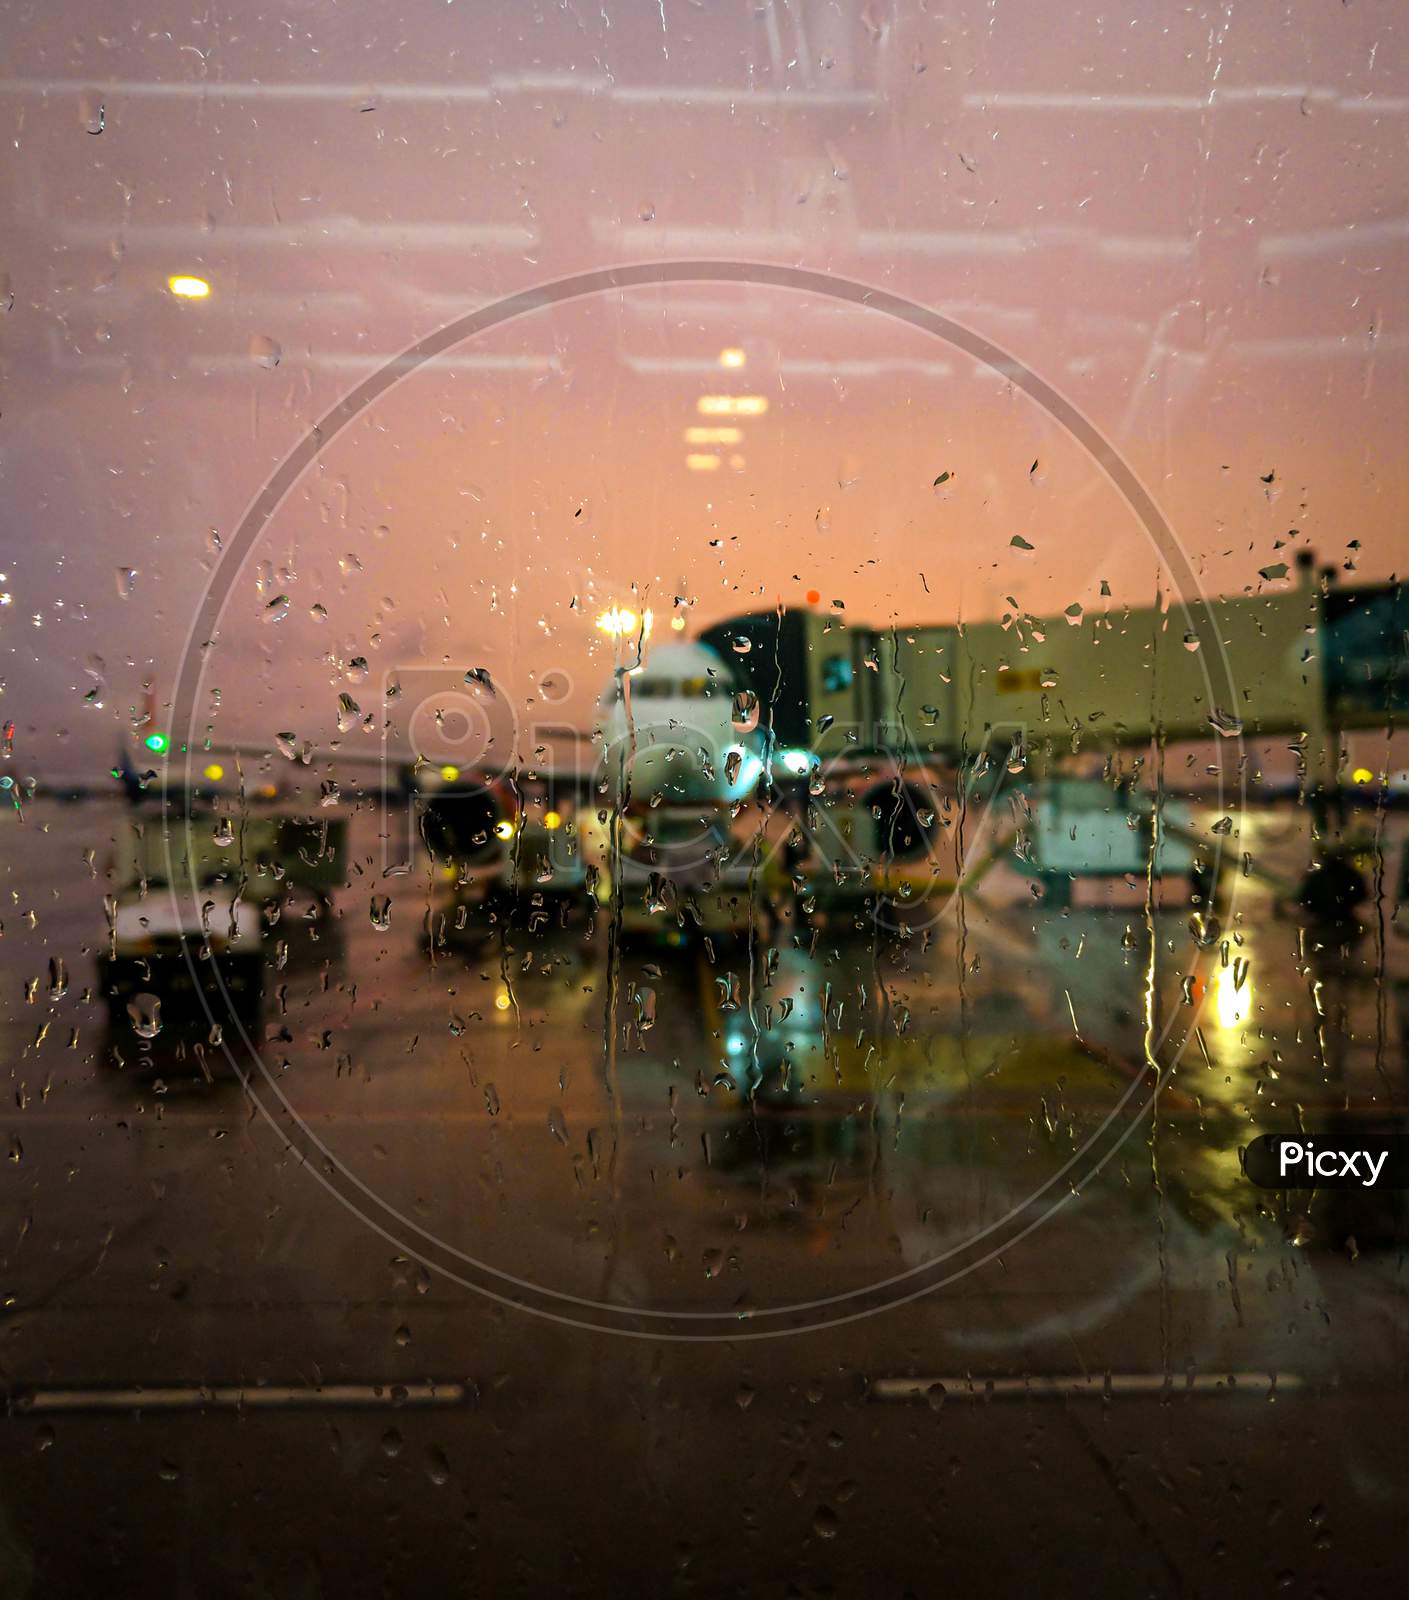 Delhi Airport on a rainy day